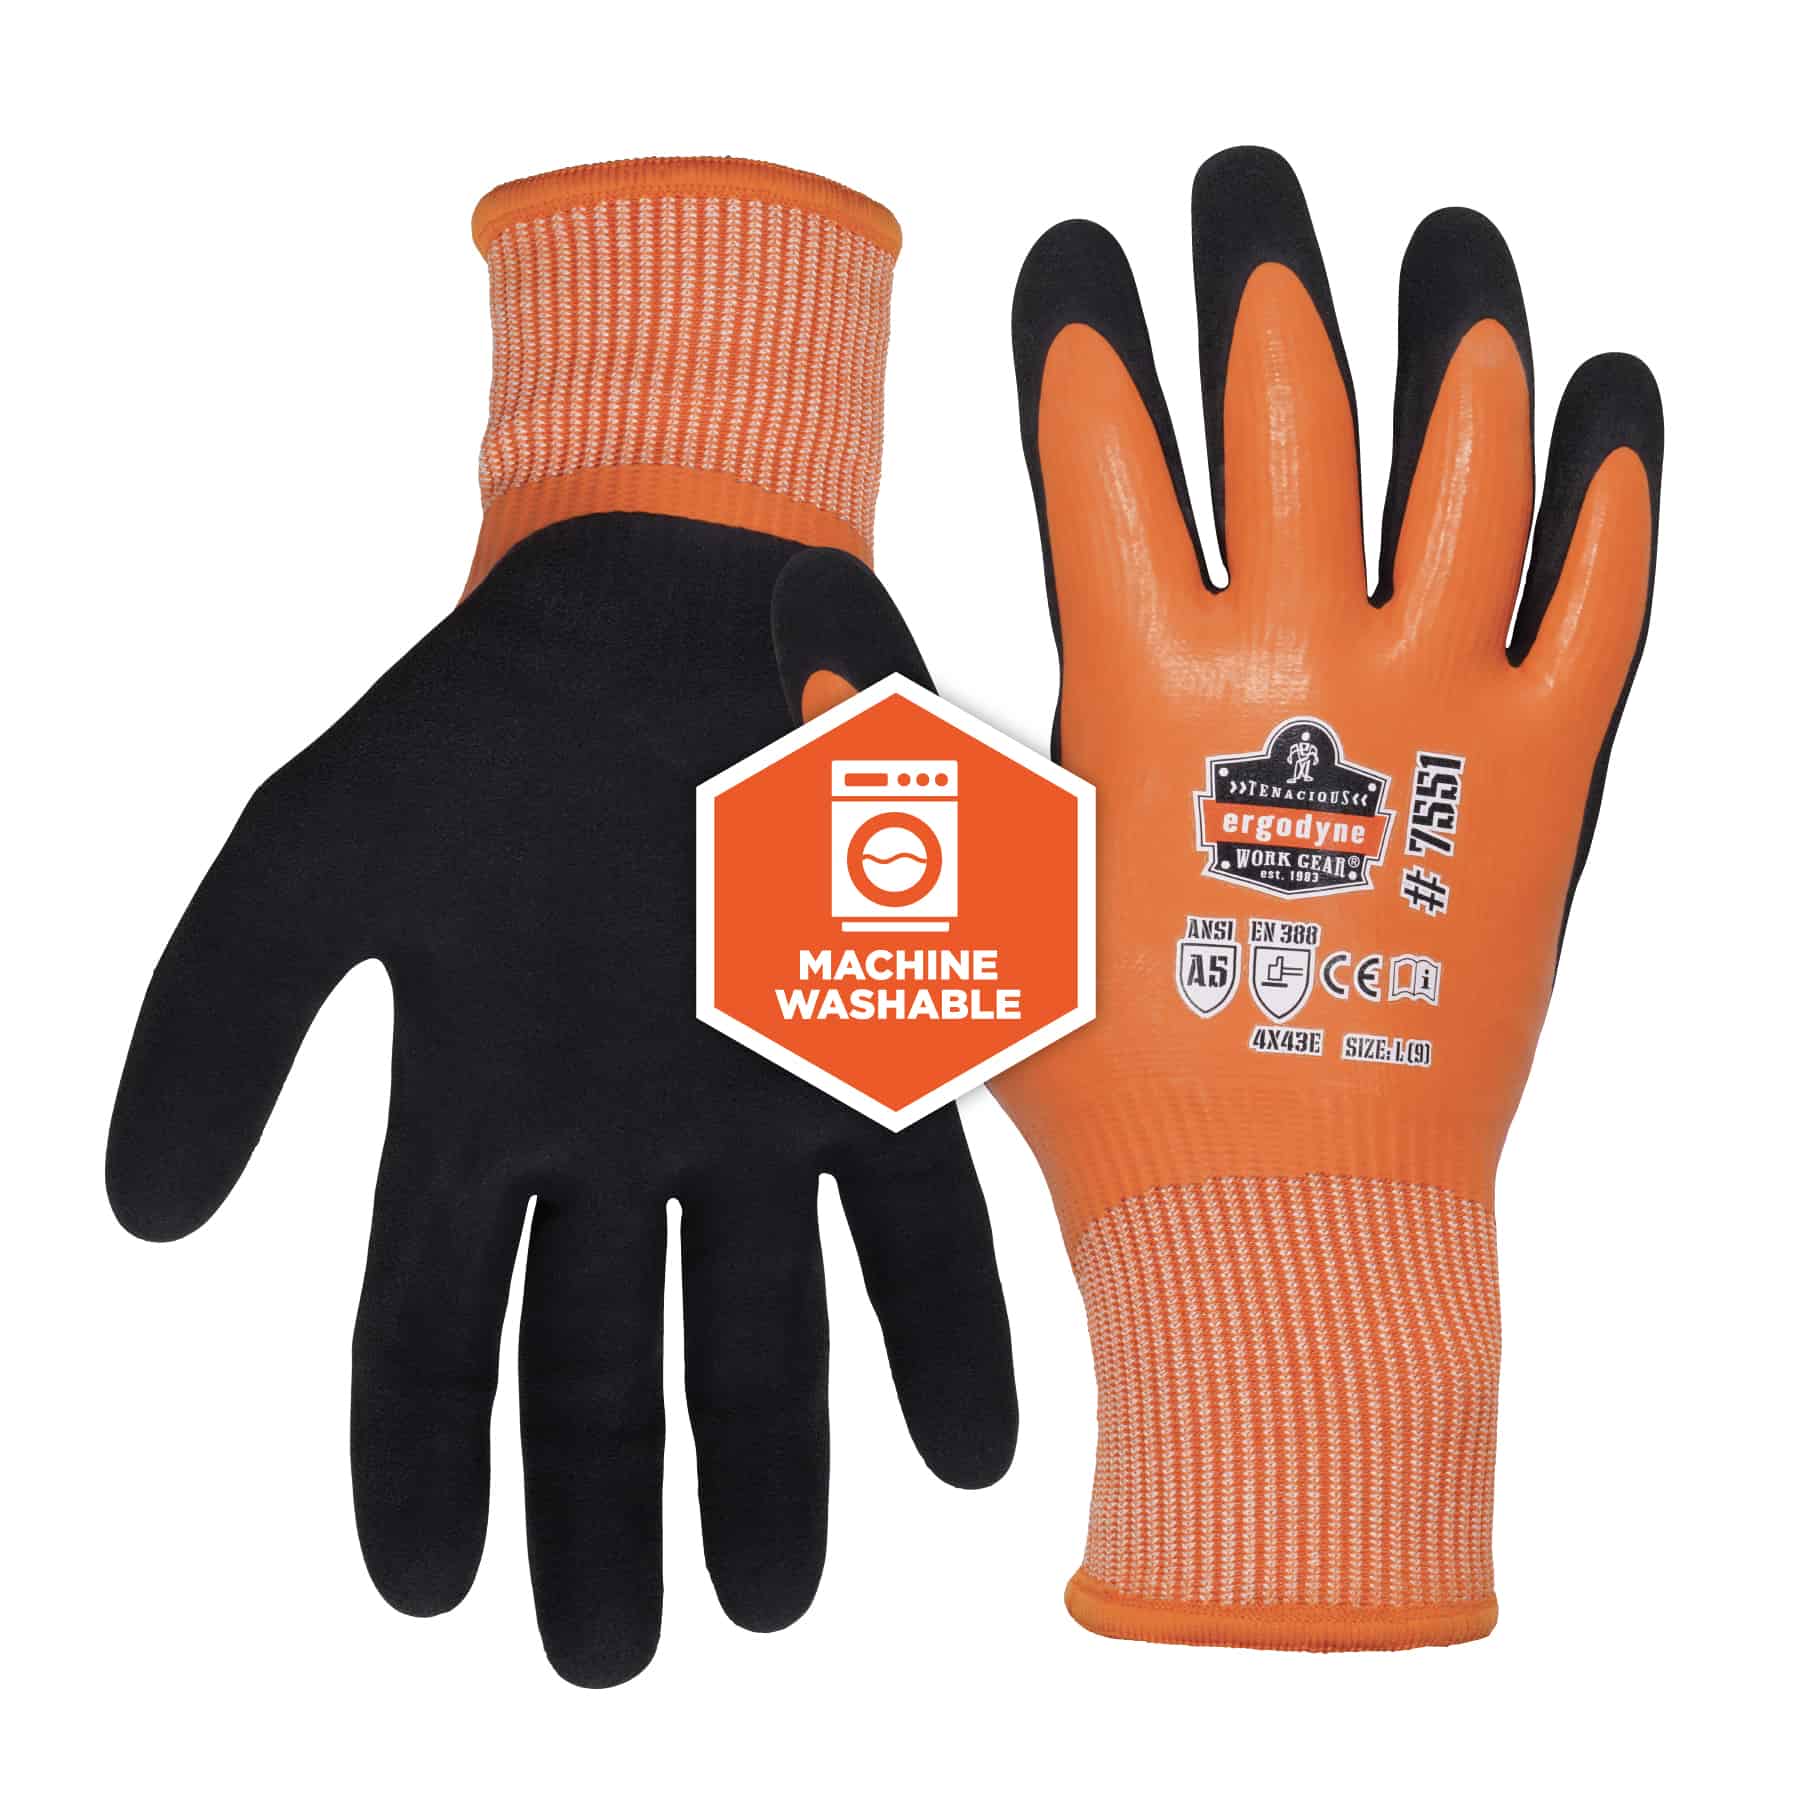 https://www.ergodyne.com/sites/default/files/product-images/17672-7551-coated-waterproof-winter-work-gloves-orange-machine-washable_0.jpg